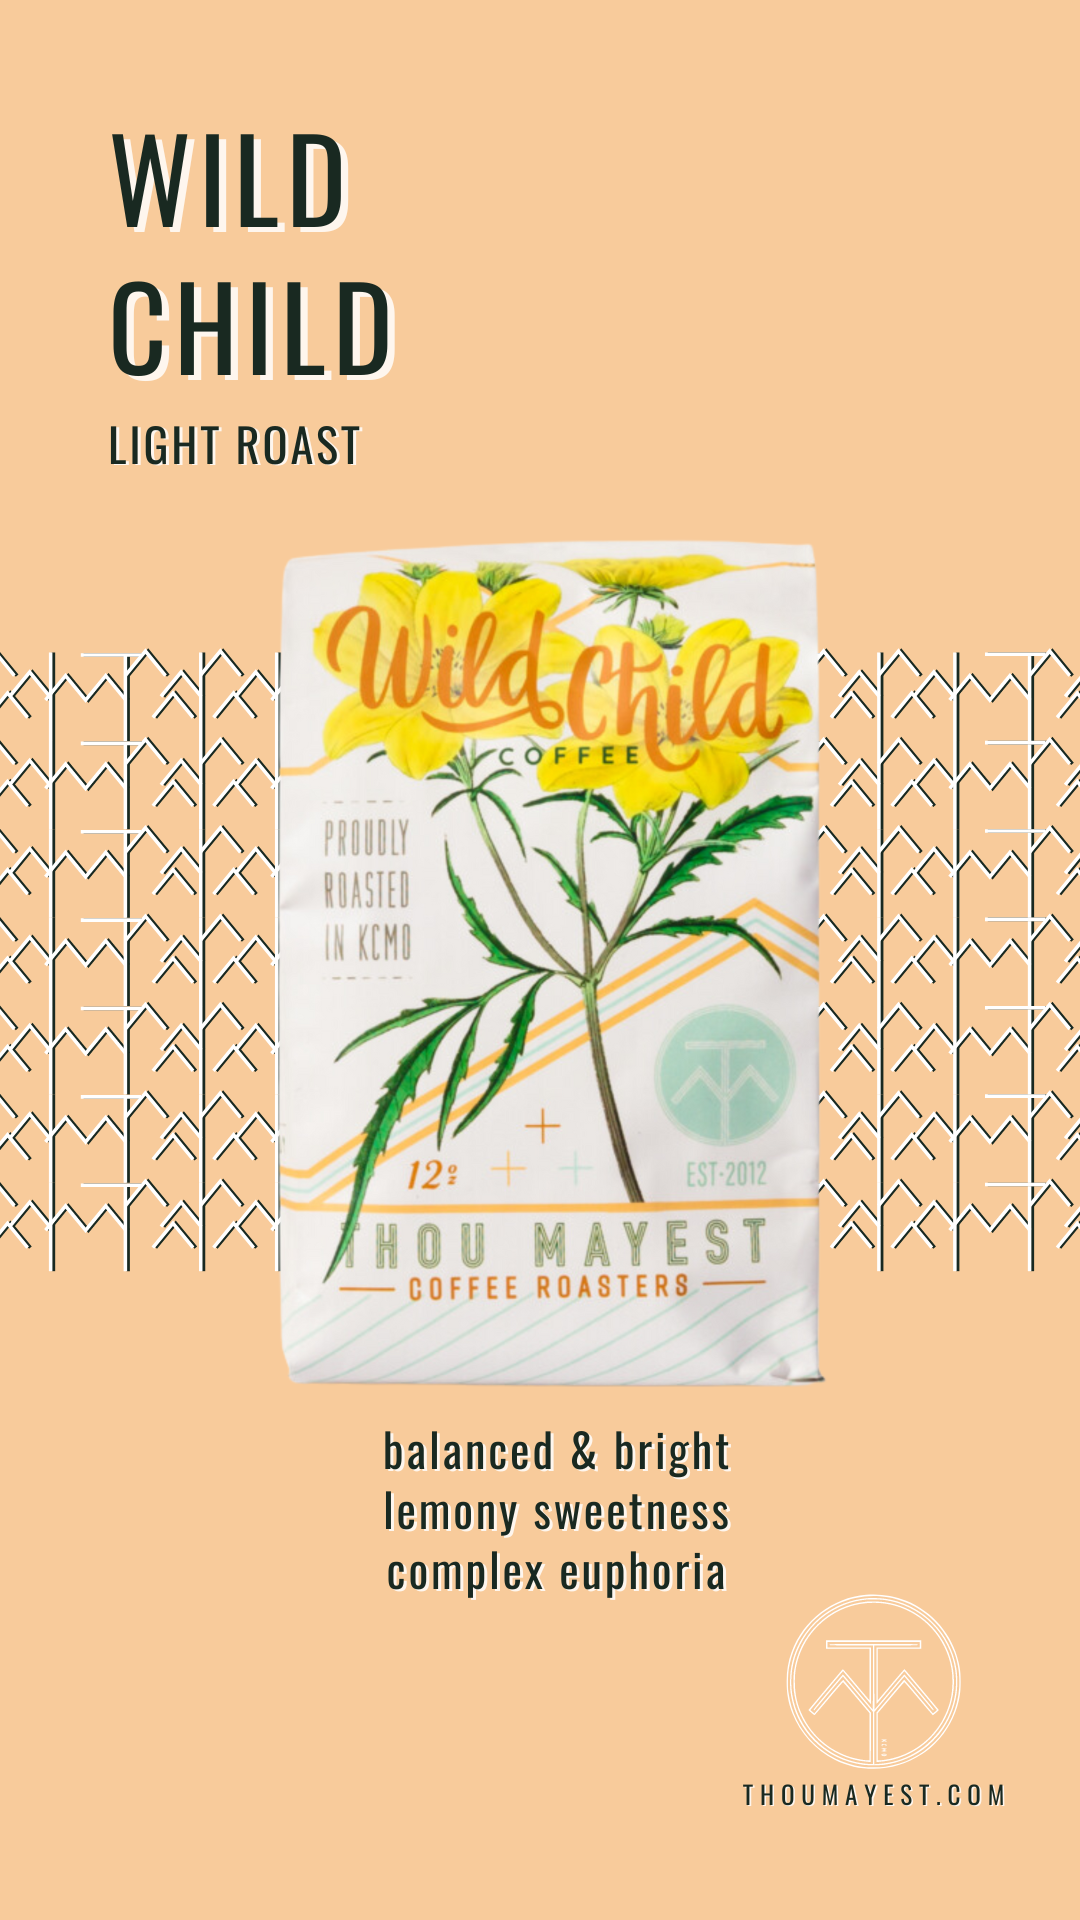 Image of Wild Child 12oz bag of coffee with description: Light roast. Balanced & bright. Lemony sweetness. Complex euphoria.